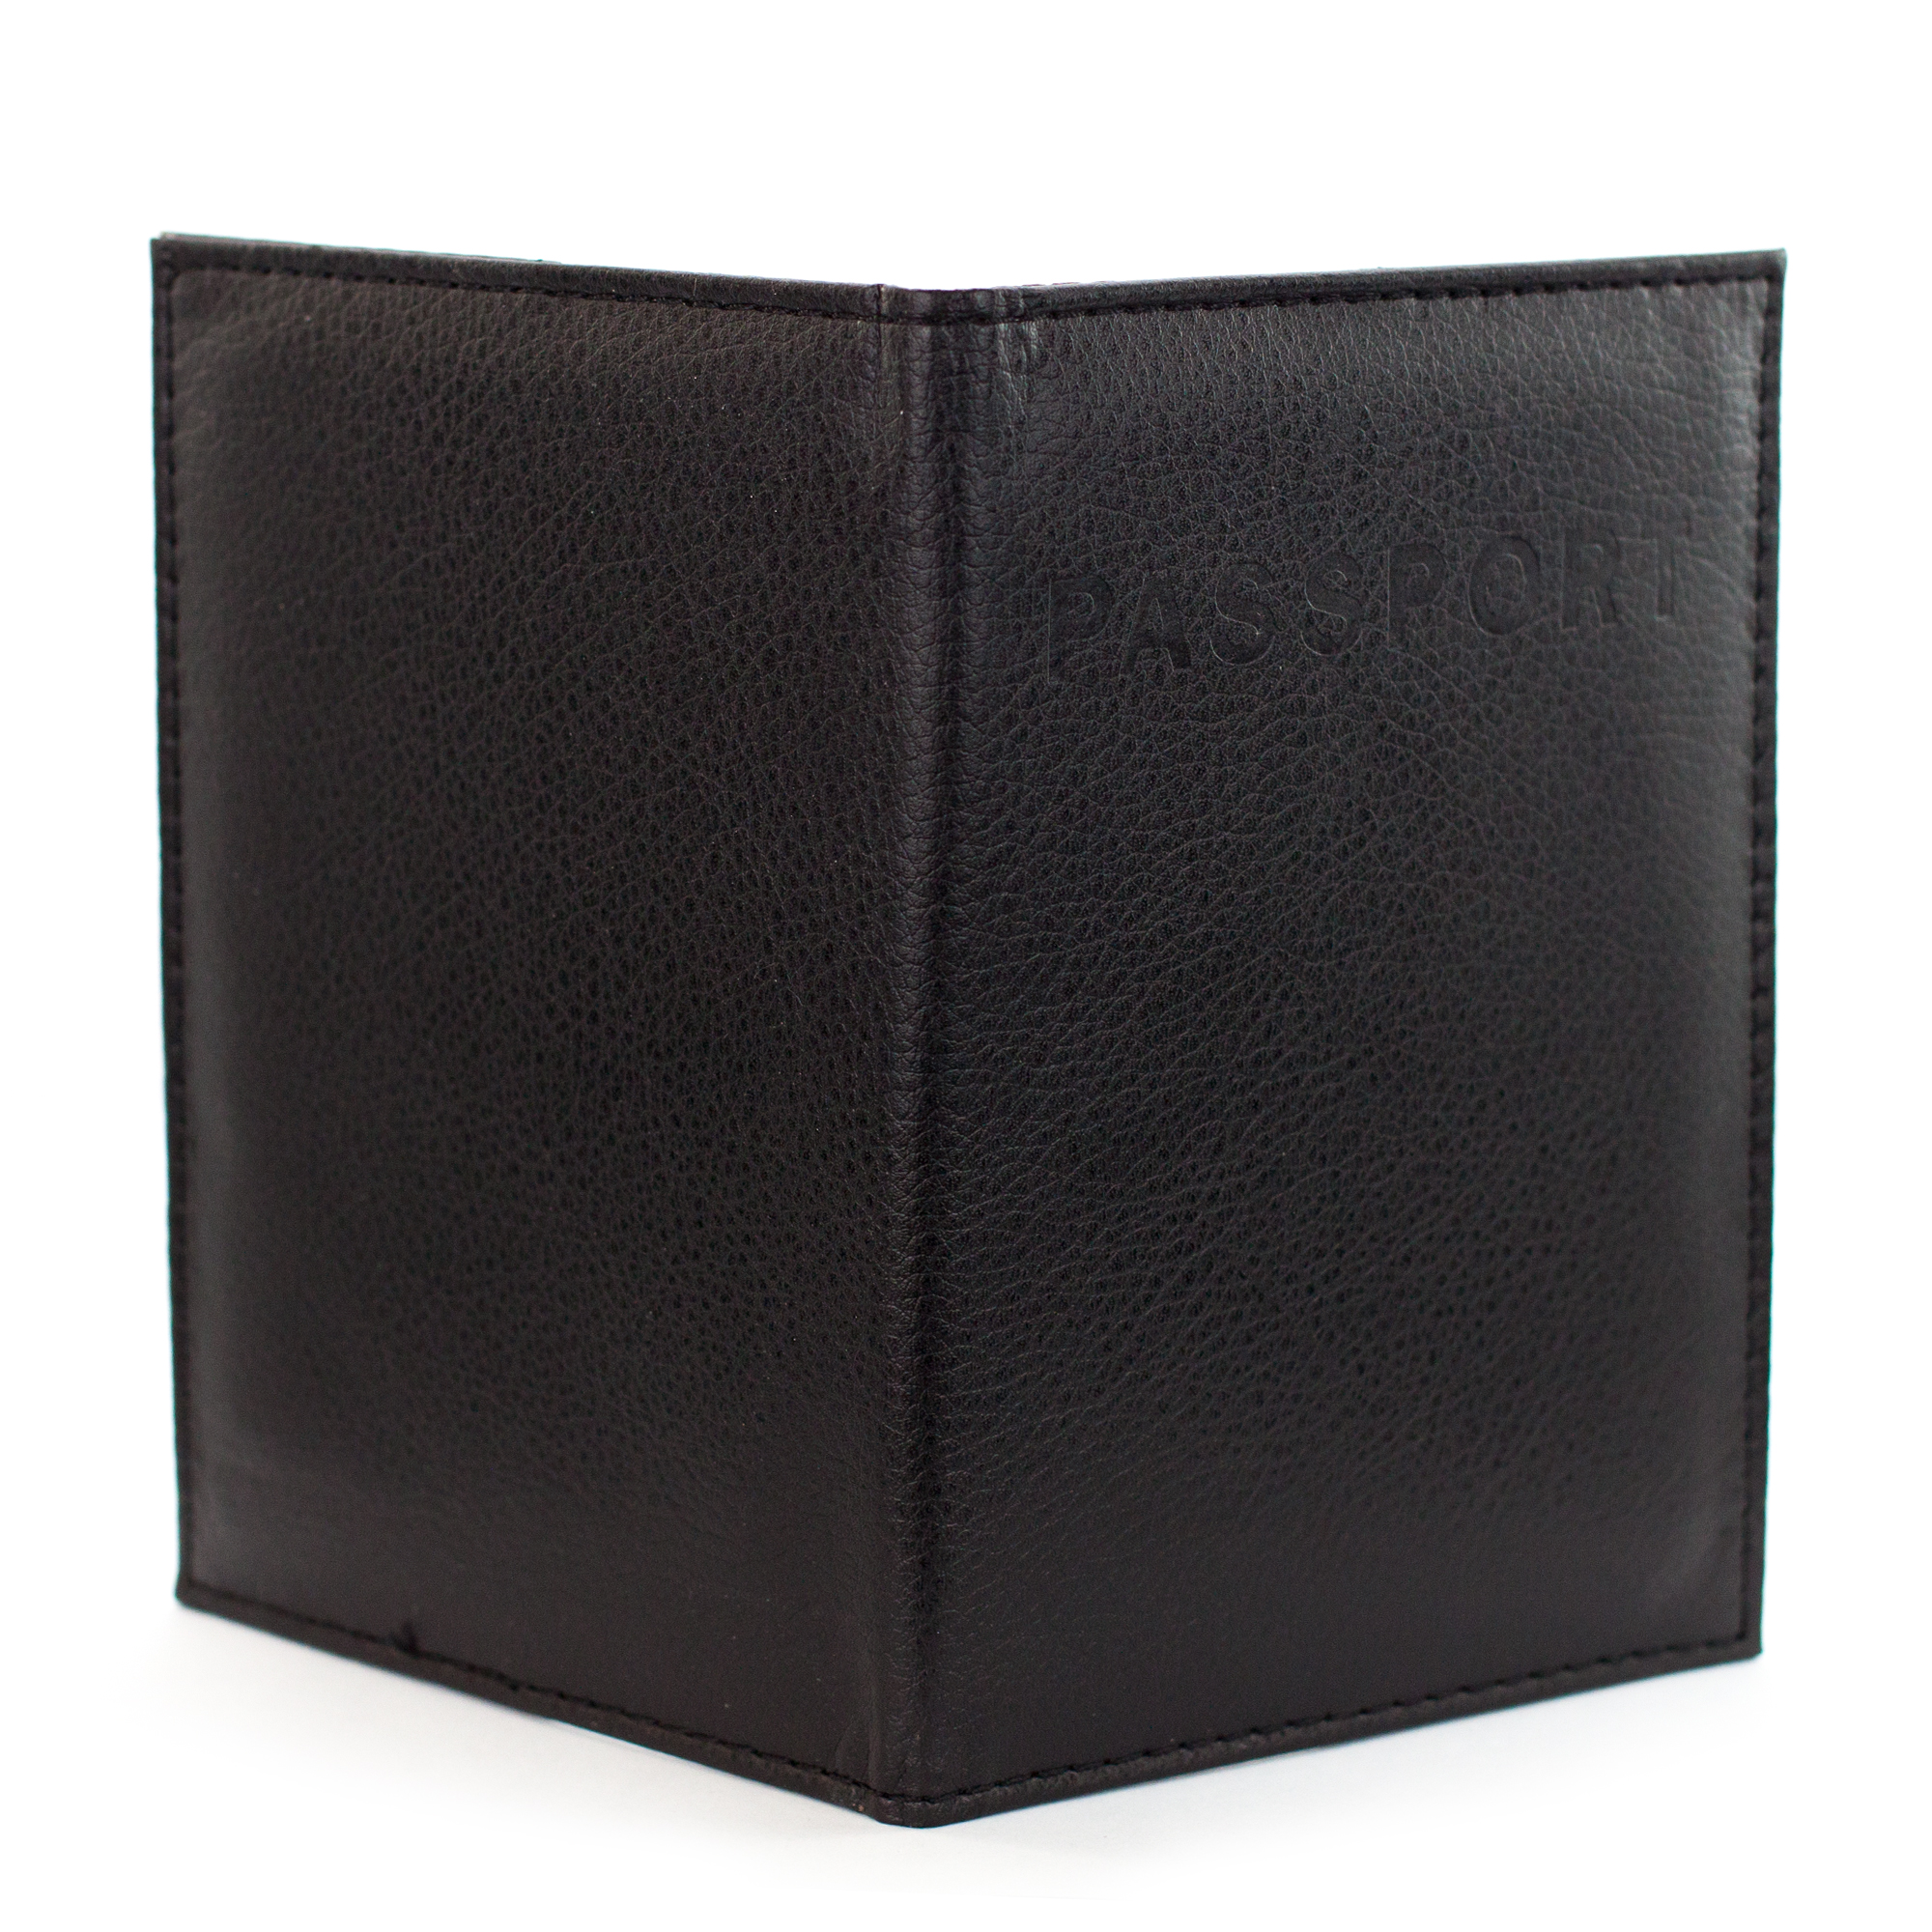 Vegan Leather RFID Blocking Passport Cover, Sturdy, Slim (Black) - image 2 of 4